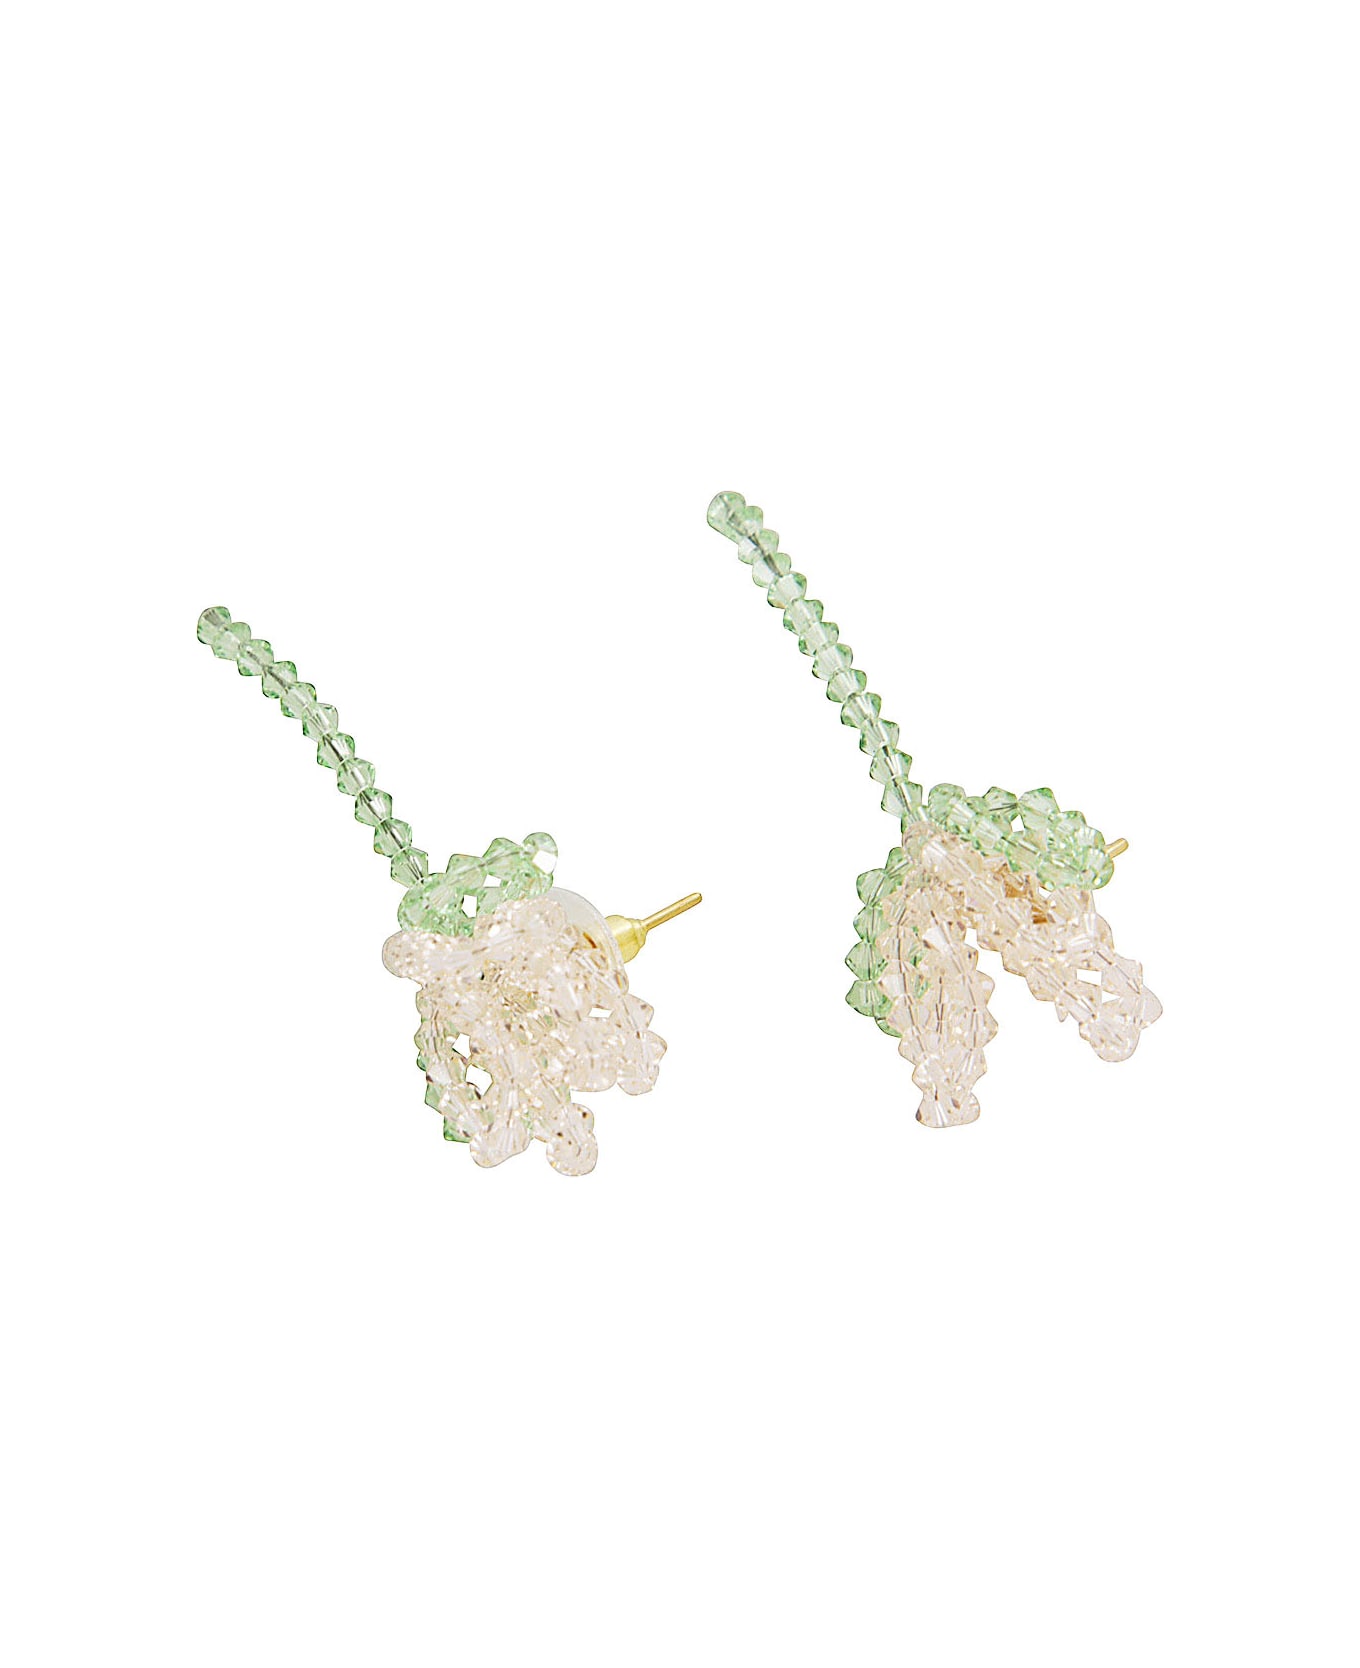 Simone Rocha Cluster Crystal Flower Earring - Nude Mint イヤリング